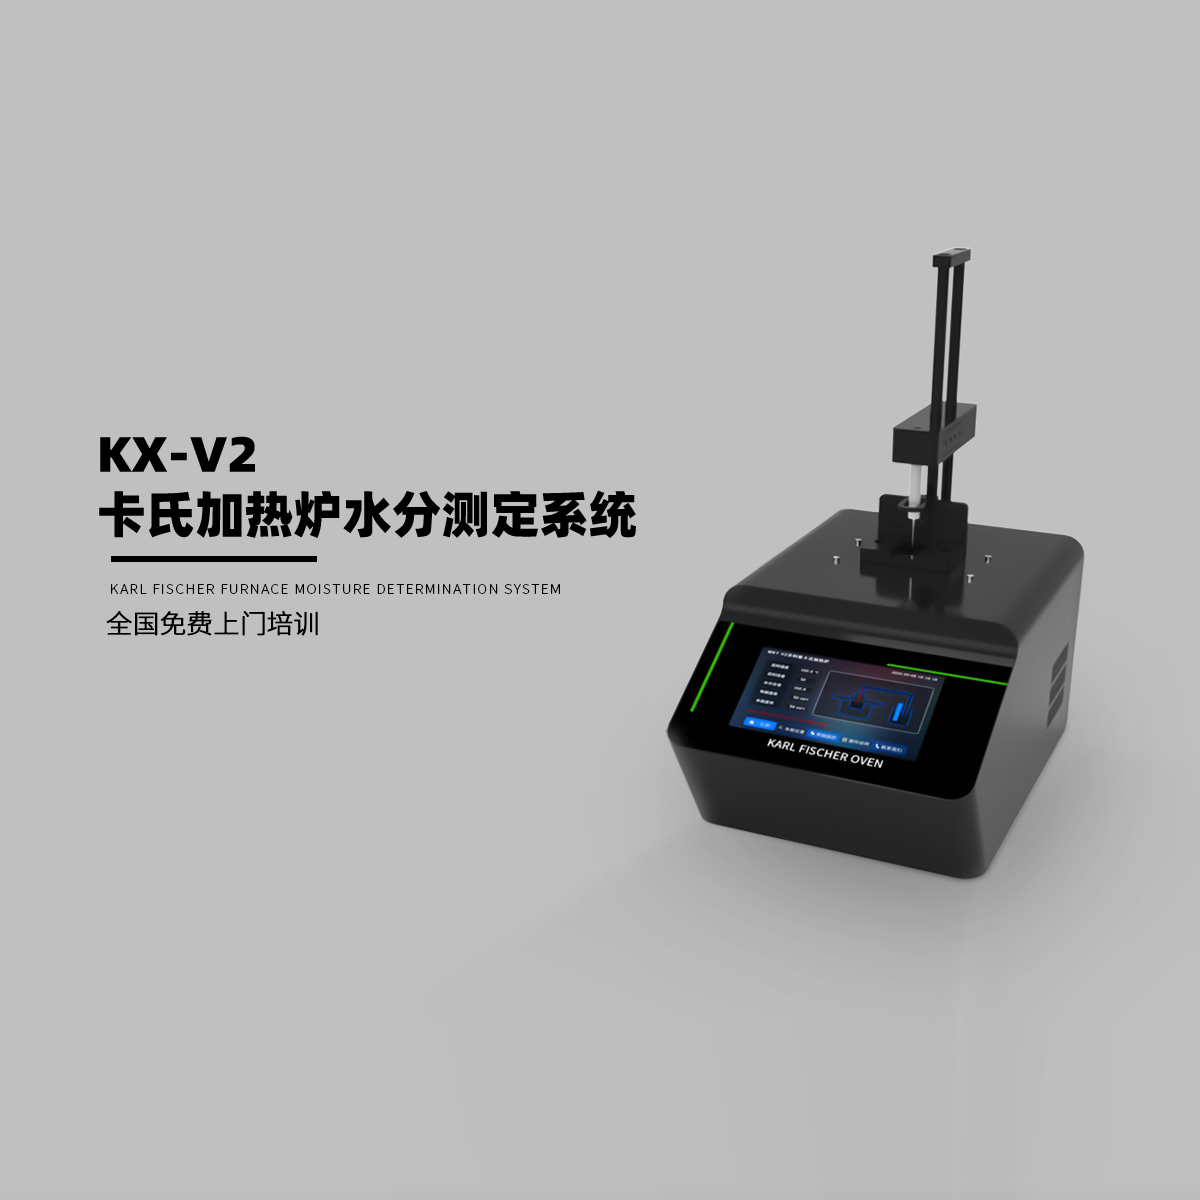 K2.jpg